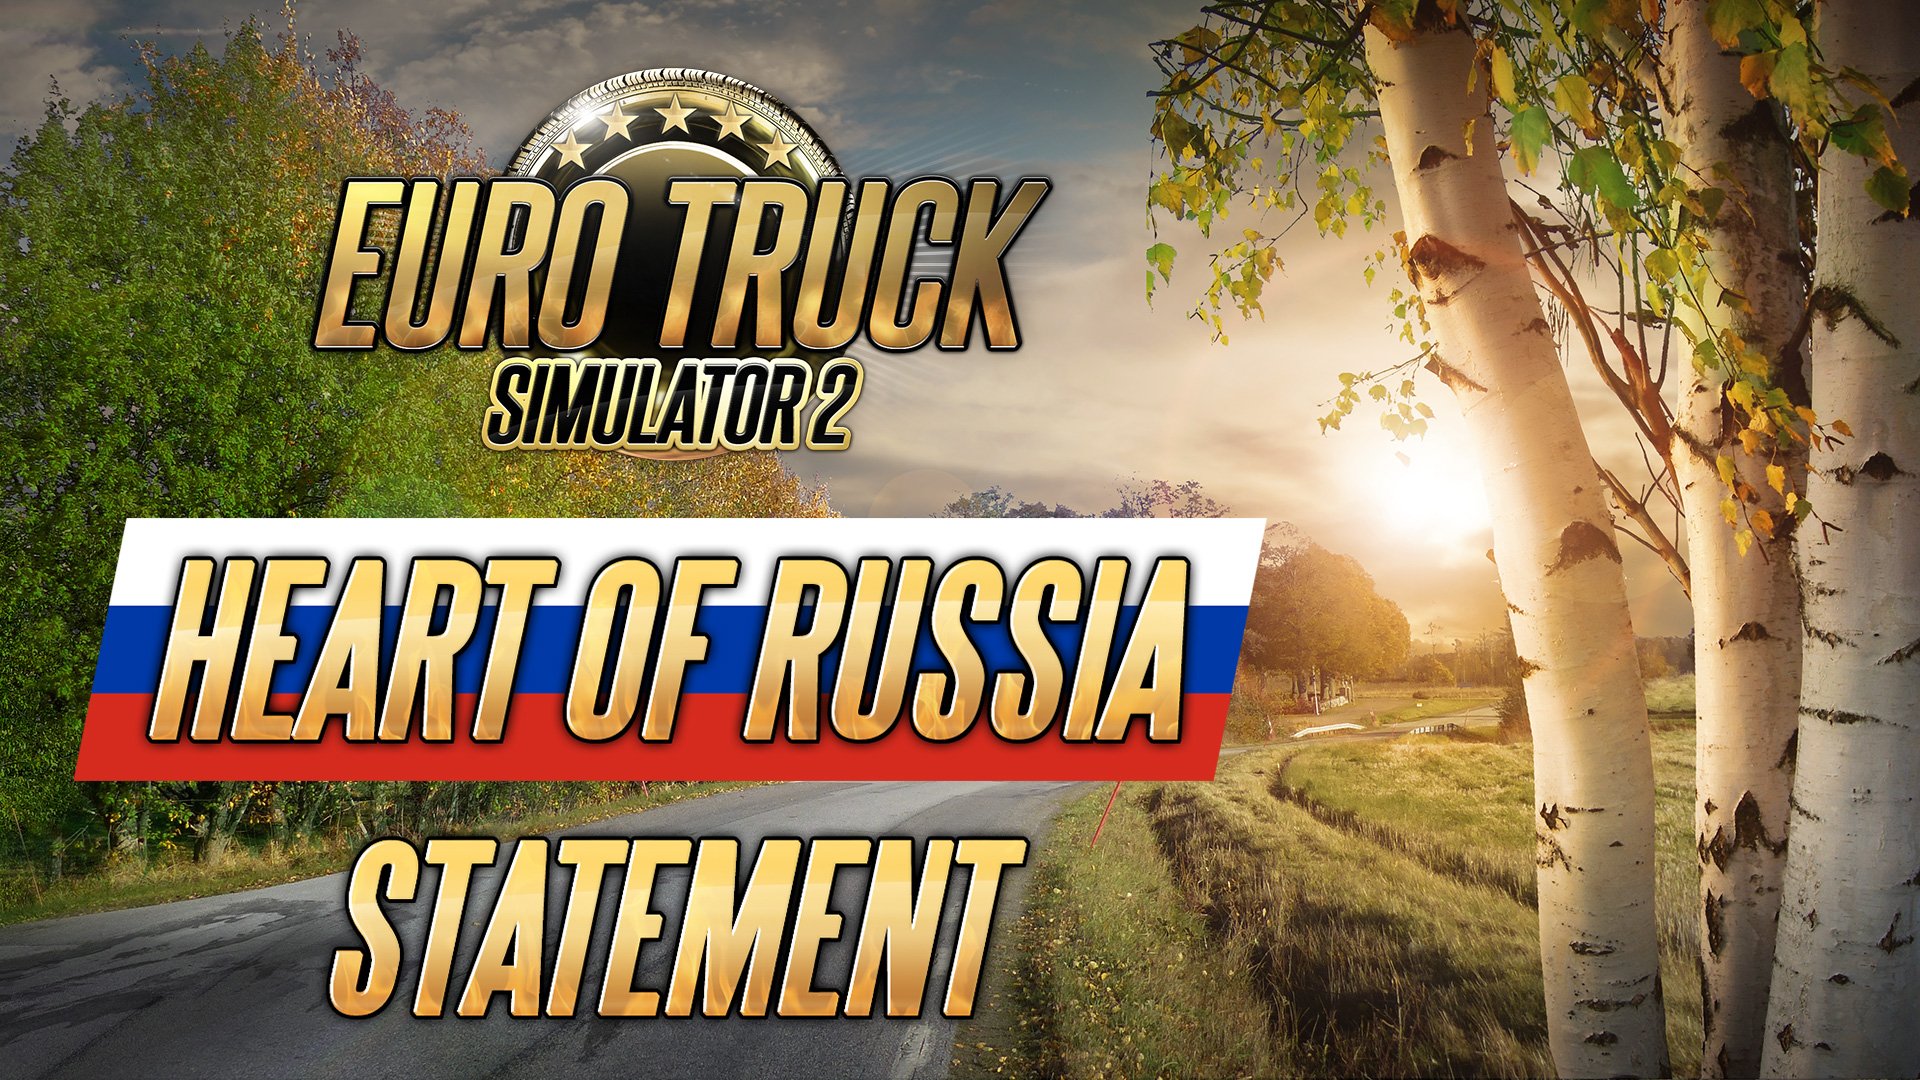 euro truck simulator 2 heart of russia ogloszenie